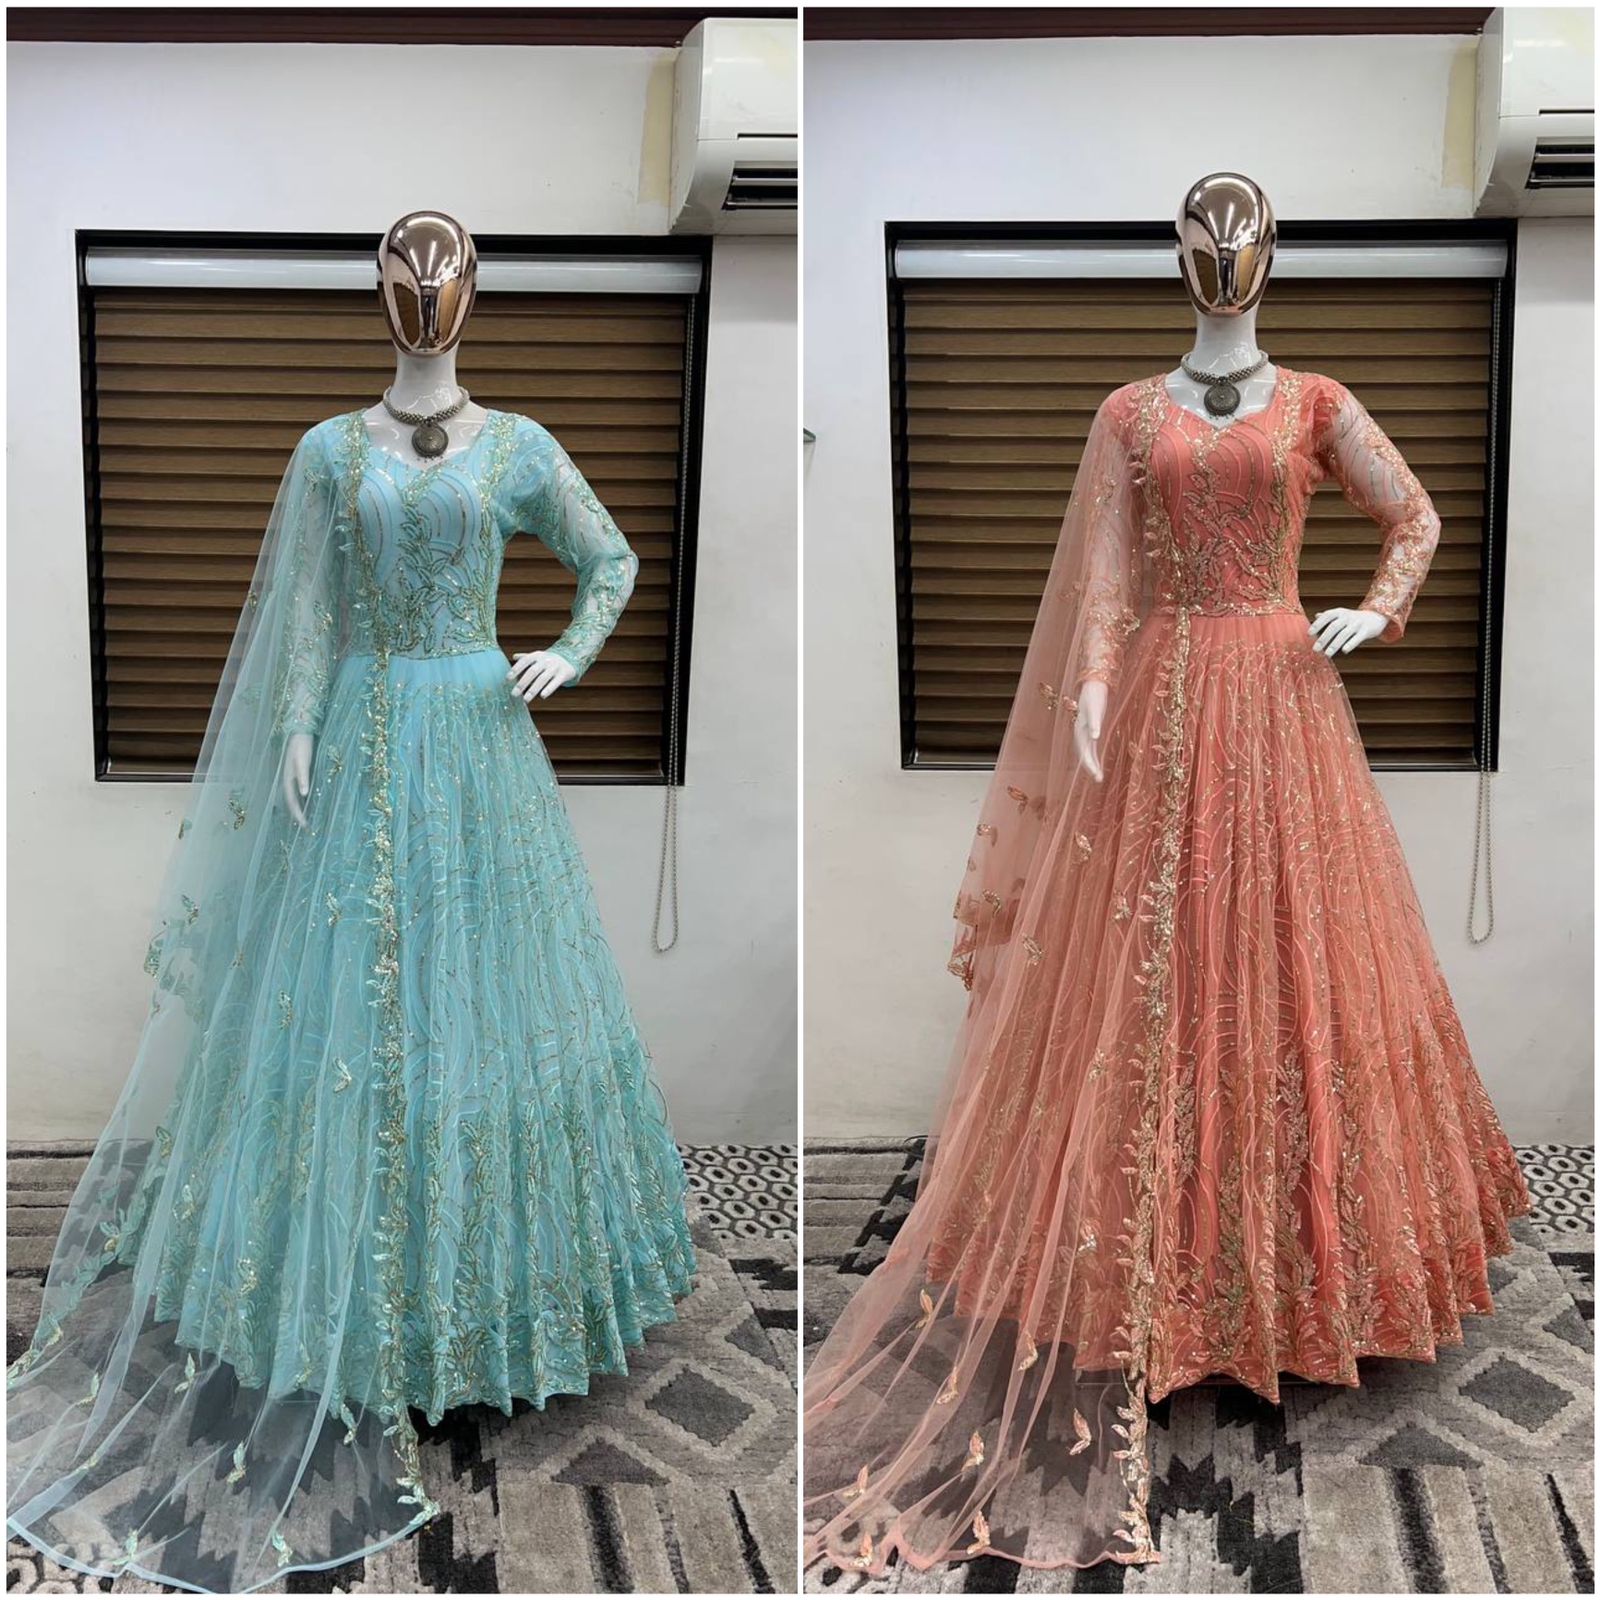 Buy Women's Mauve Long Anarkali A-Line Sleeveless Indo-Western Dress -  Saras The Label